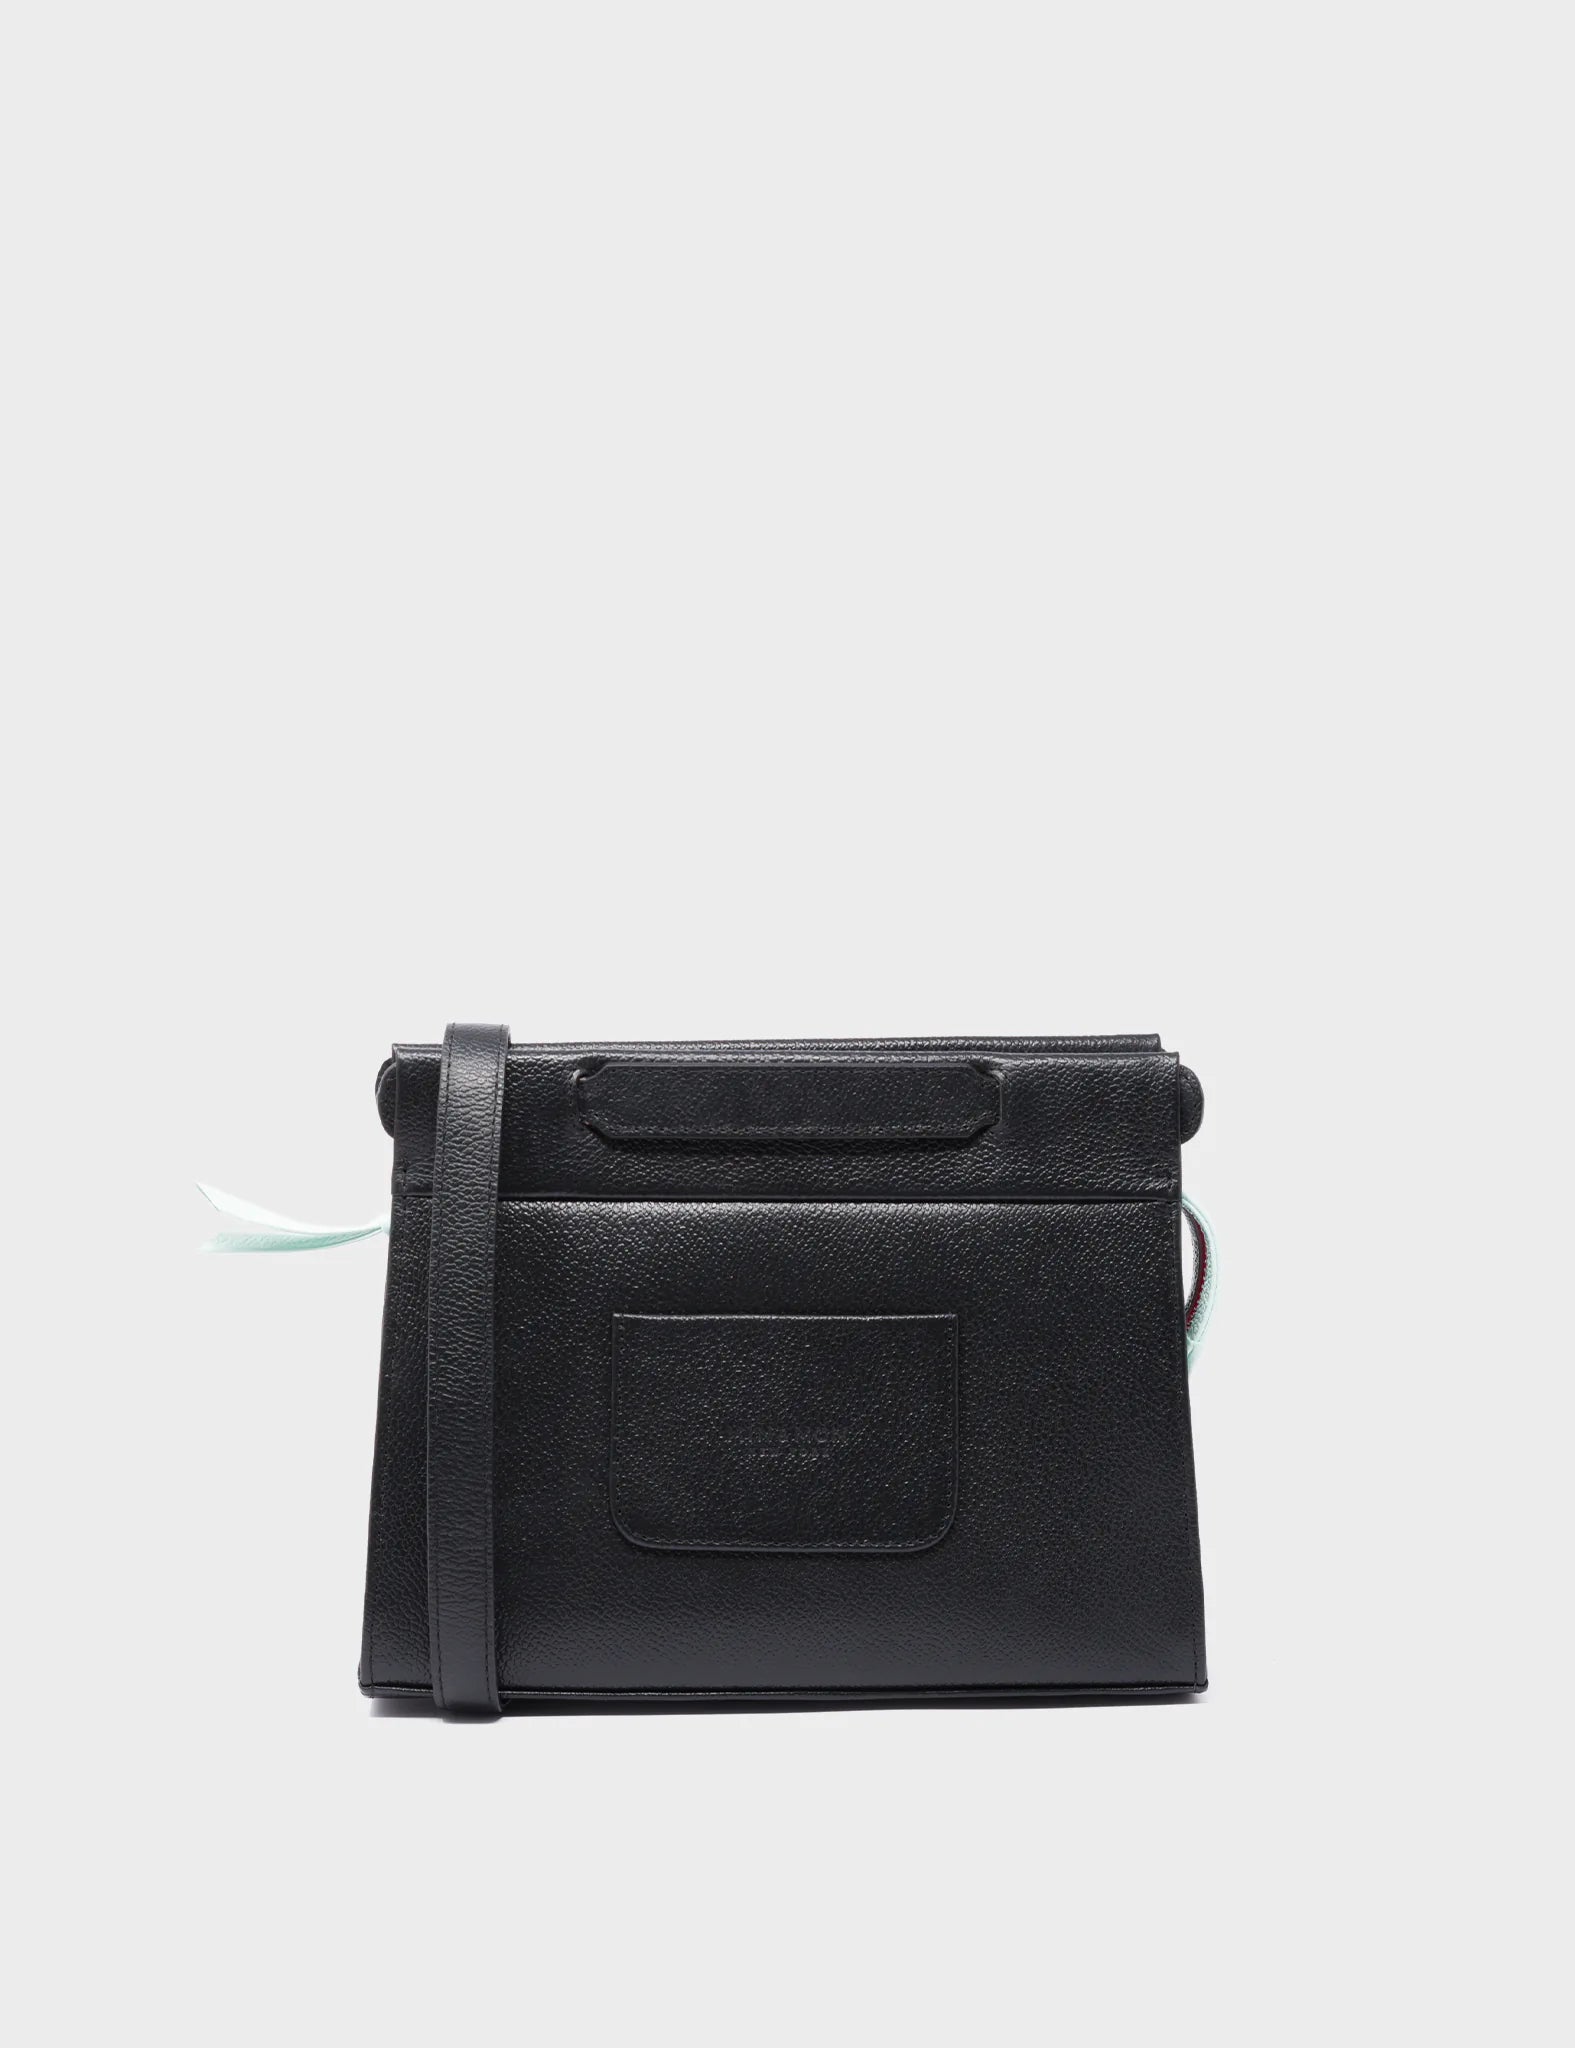 Vali Crossbody Small Black Leather Bag - El Tropico Print and Embroidery Design - Back